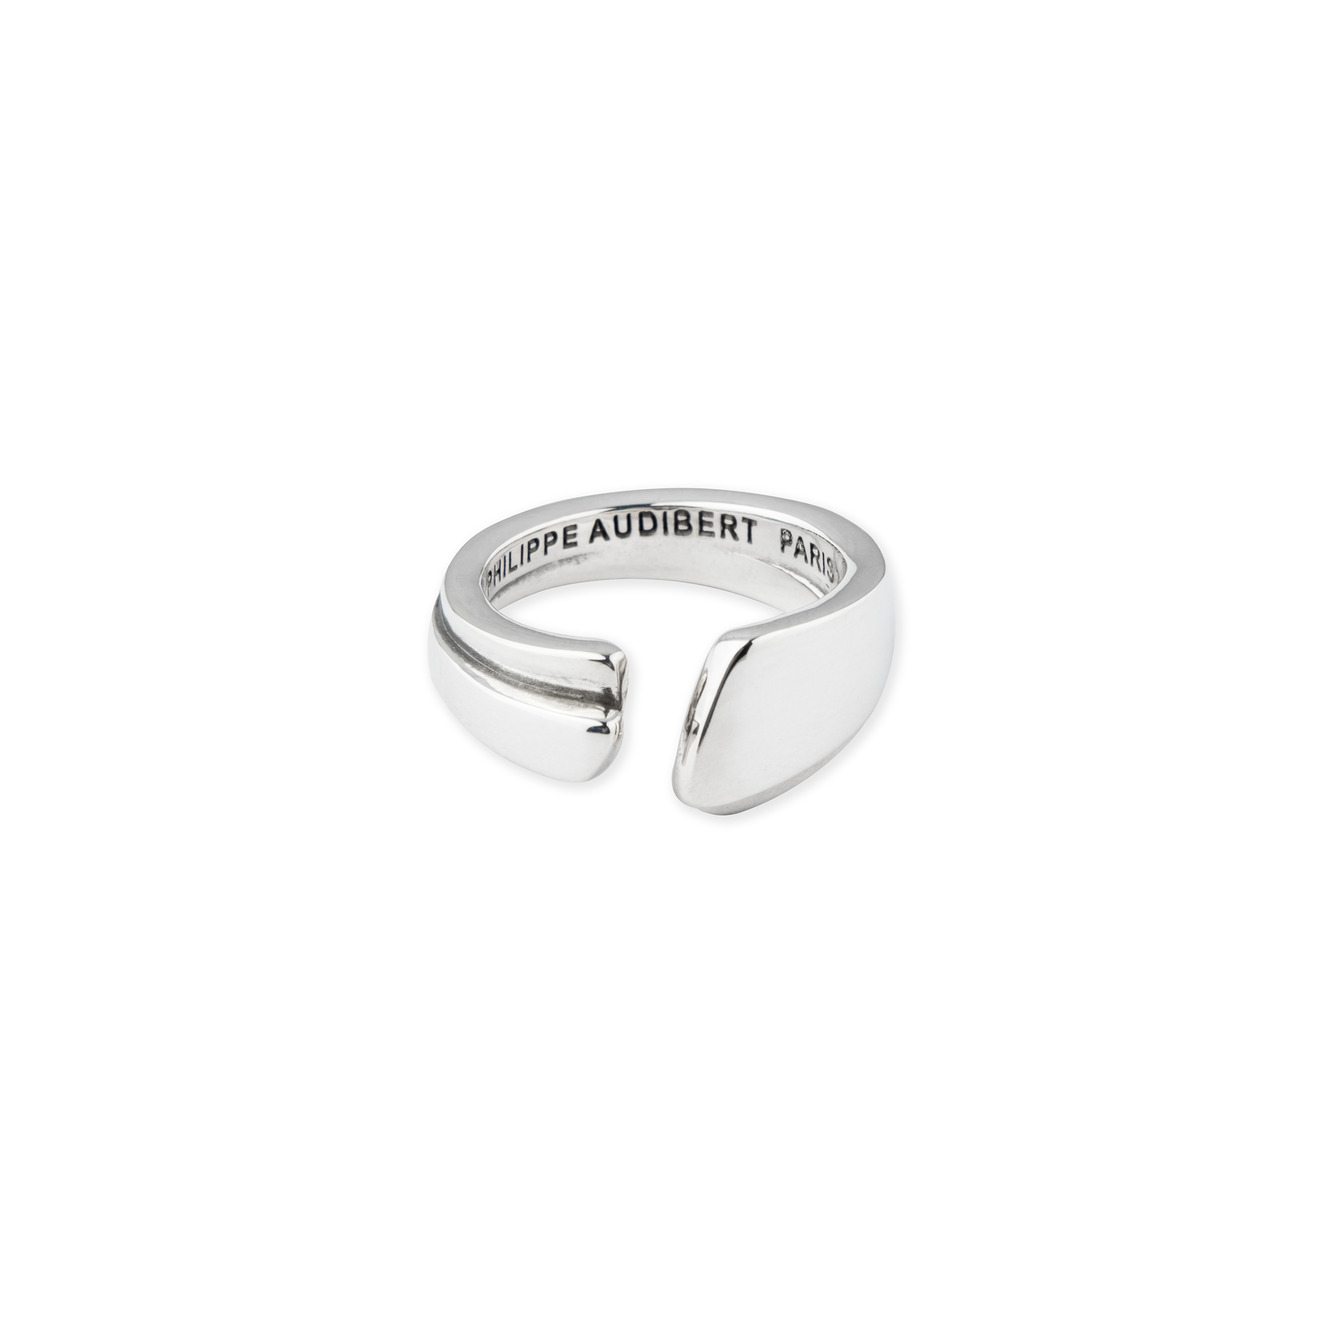 Philippe Audibert Кольцо Etena ring bress с серебряным покрытием philippe audibert кольцо с серебряным покрытием gael ring